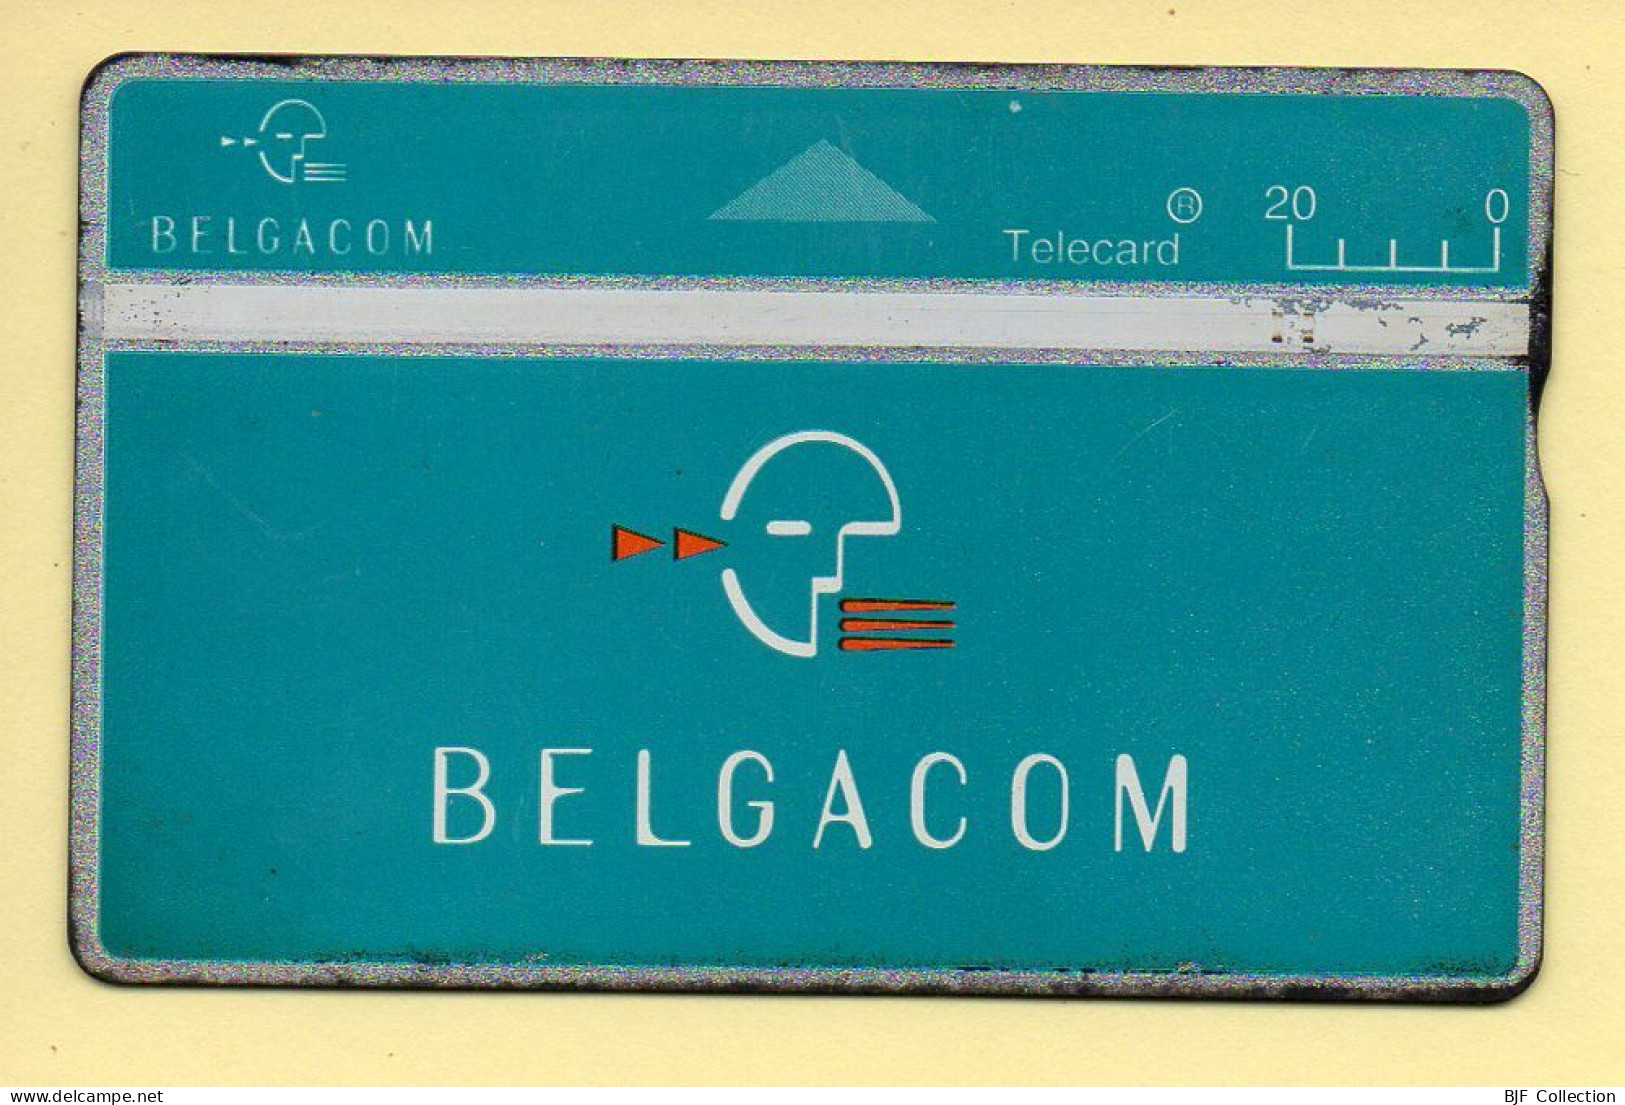 Télécarte : Belgique : BELGACOM  - Senza Chip